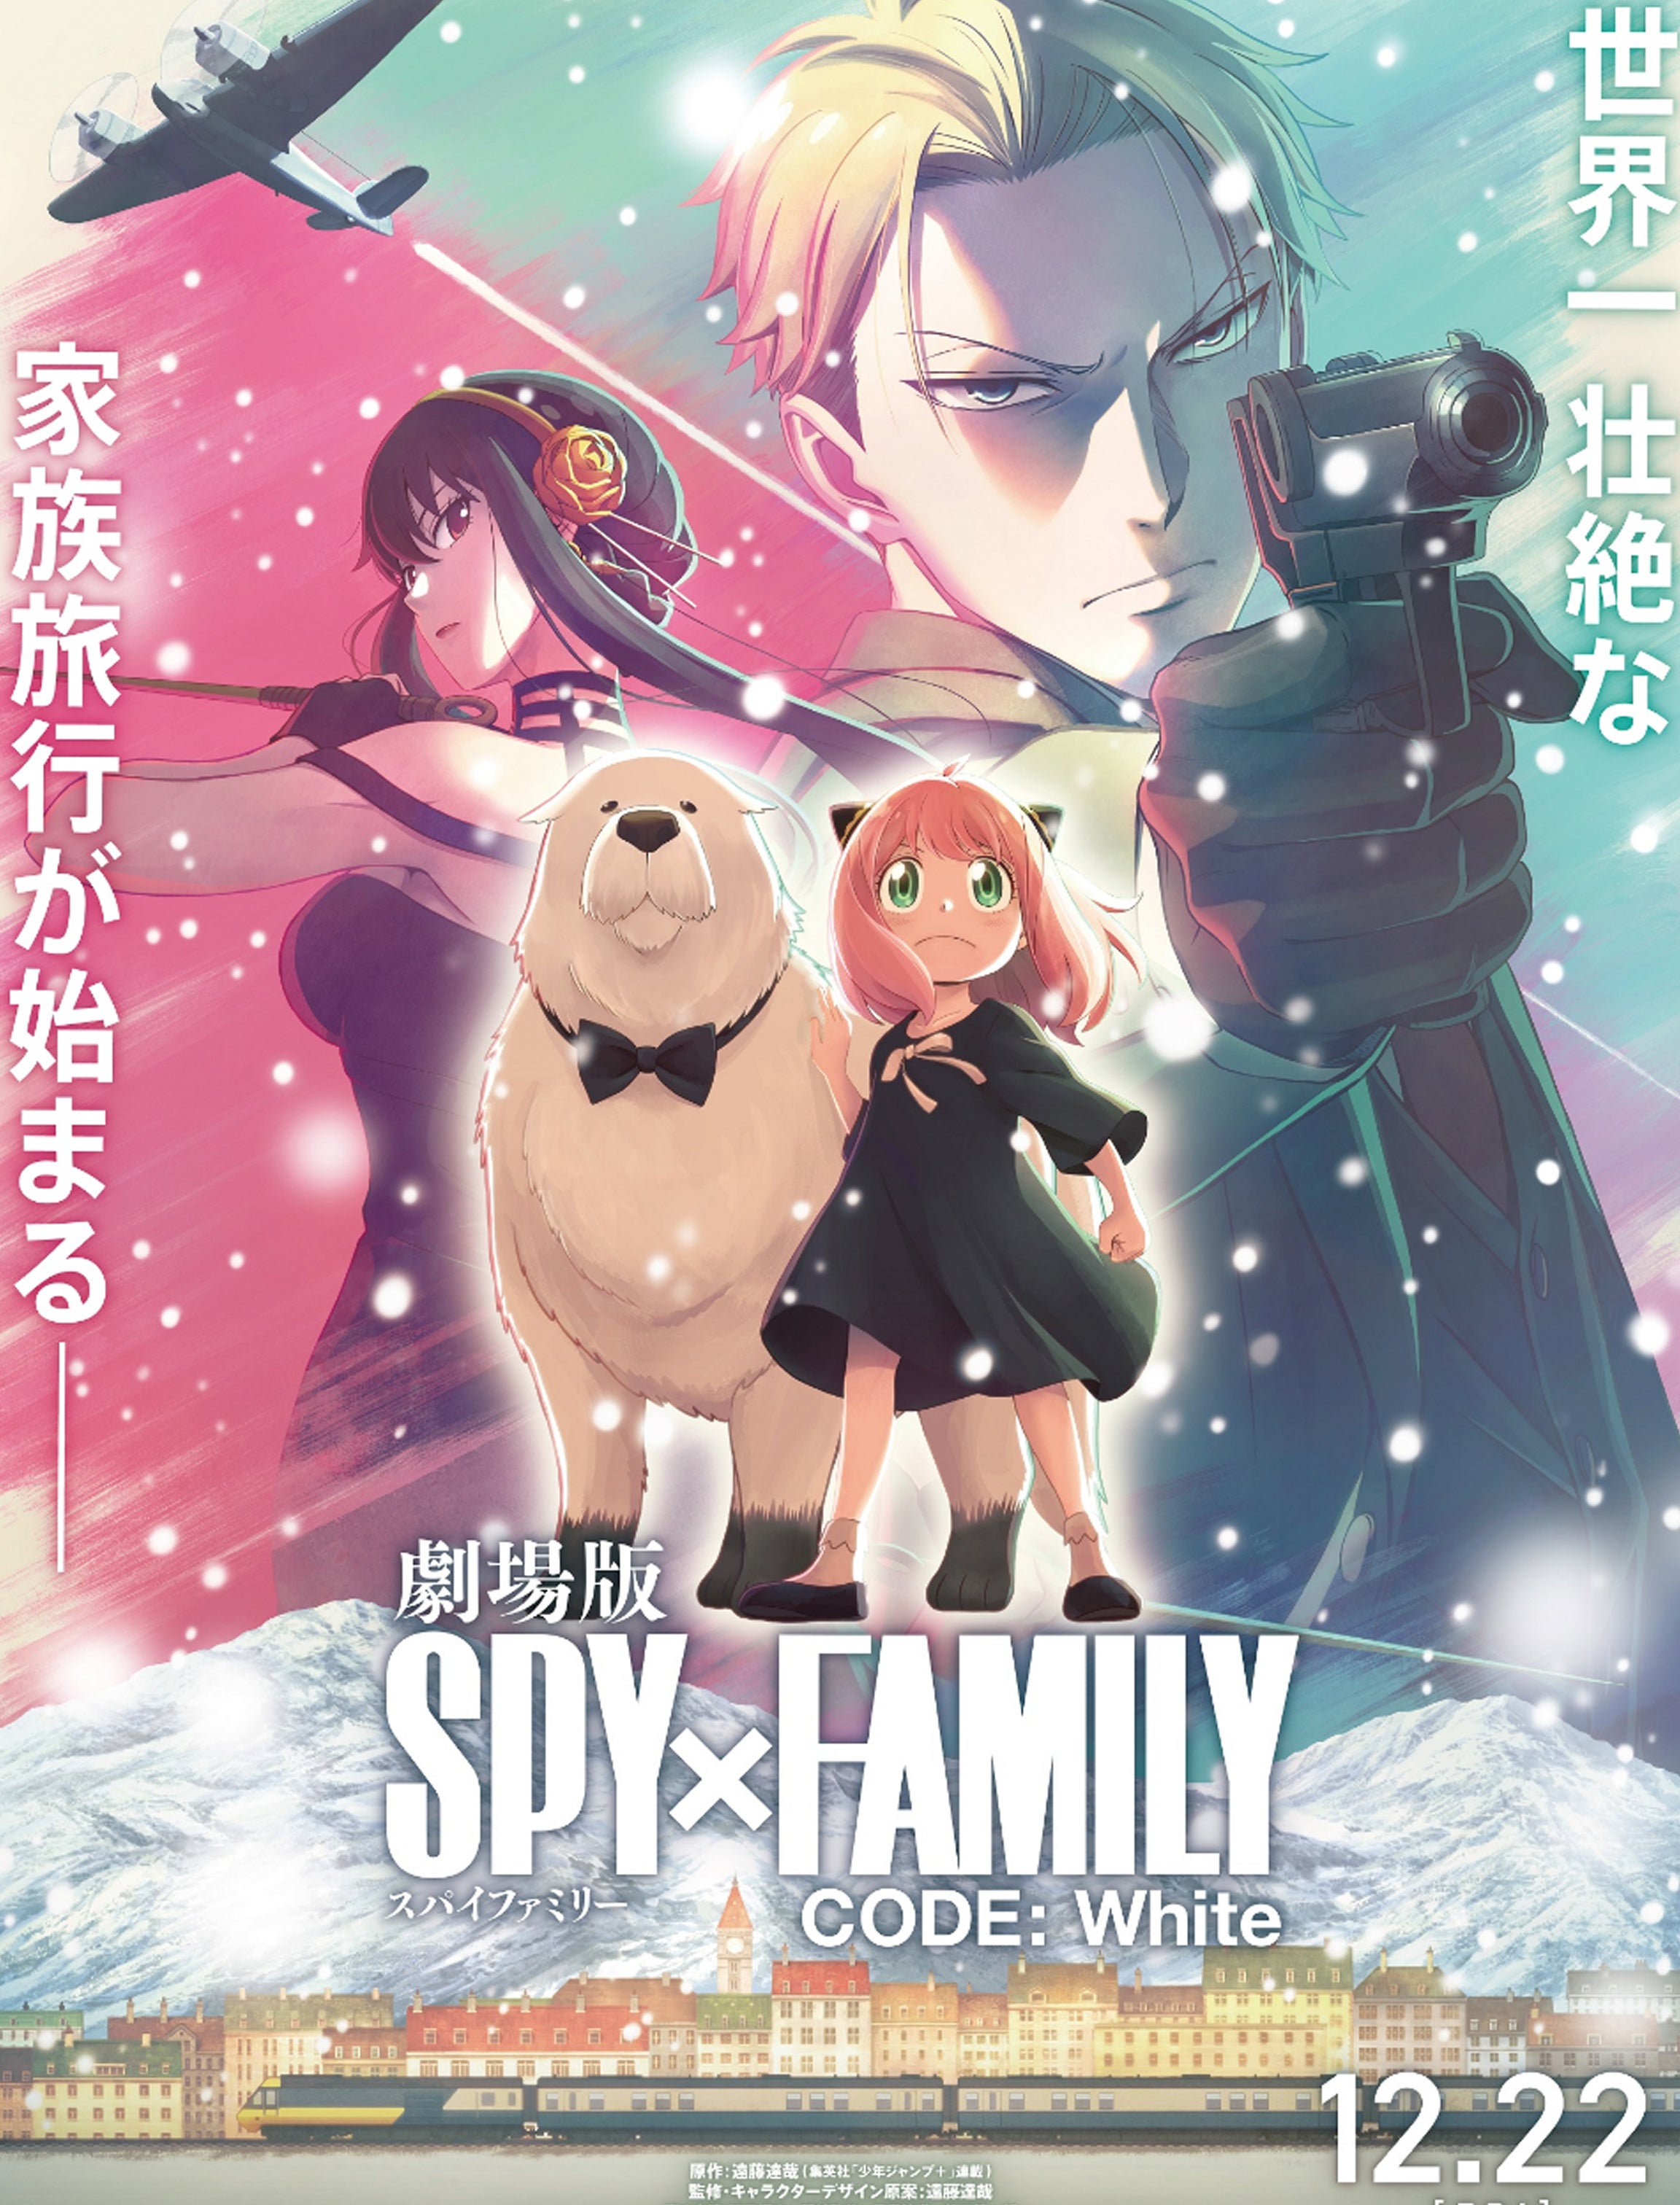 New Spy x Family Animation Art Book Available Internationally in December